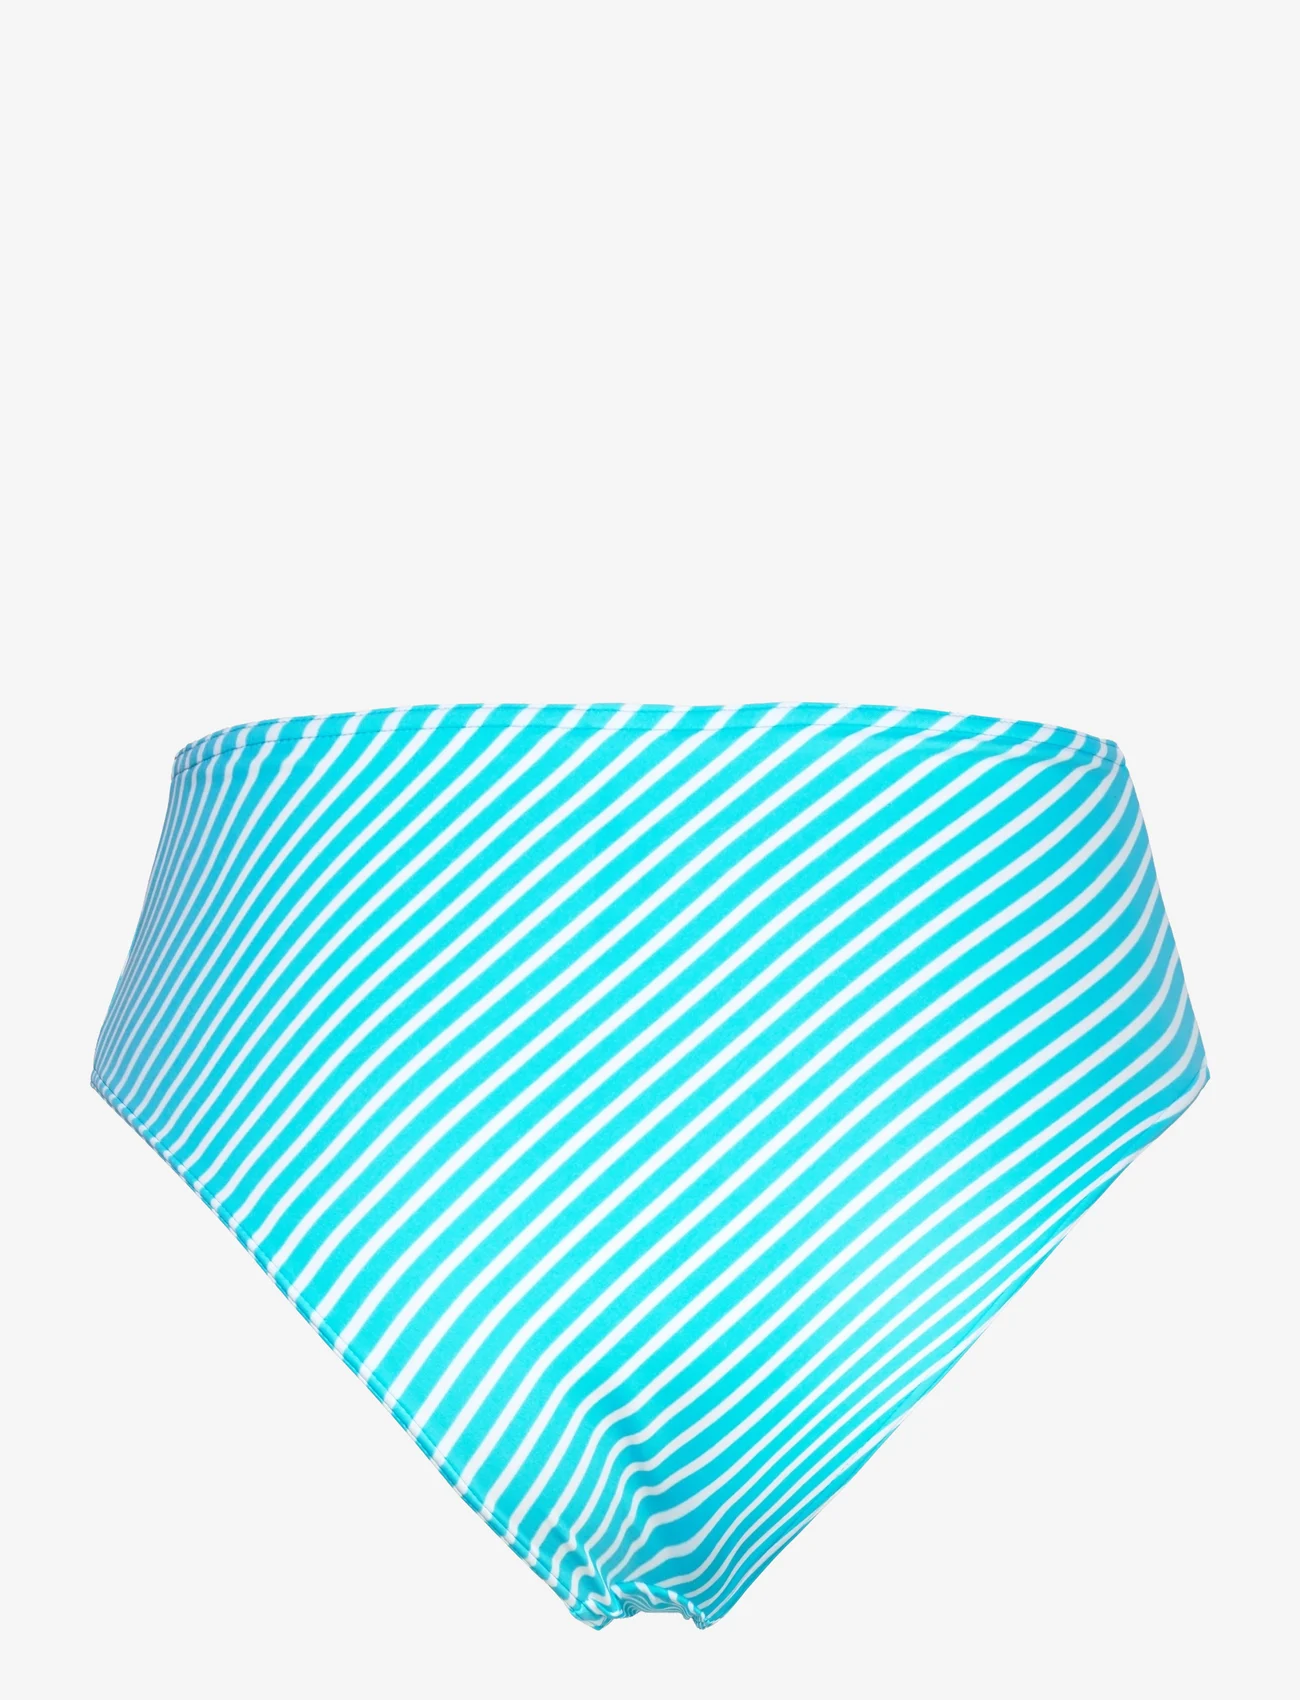 Freya - JEWEL COVE - bikinitrosor med hög midja - stripe turquoise - 1